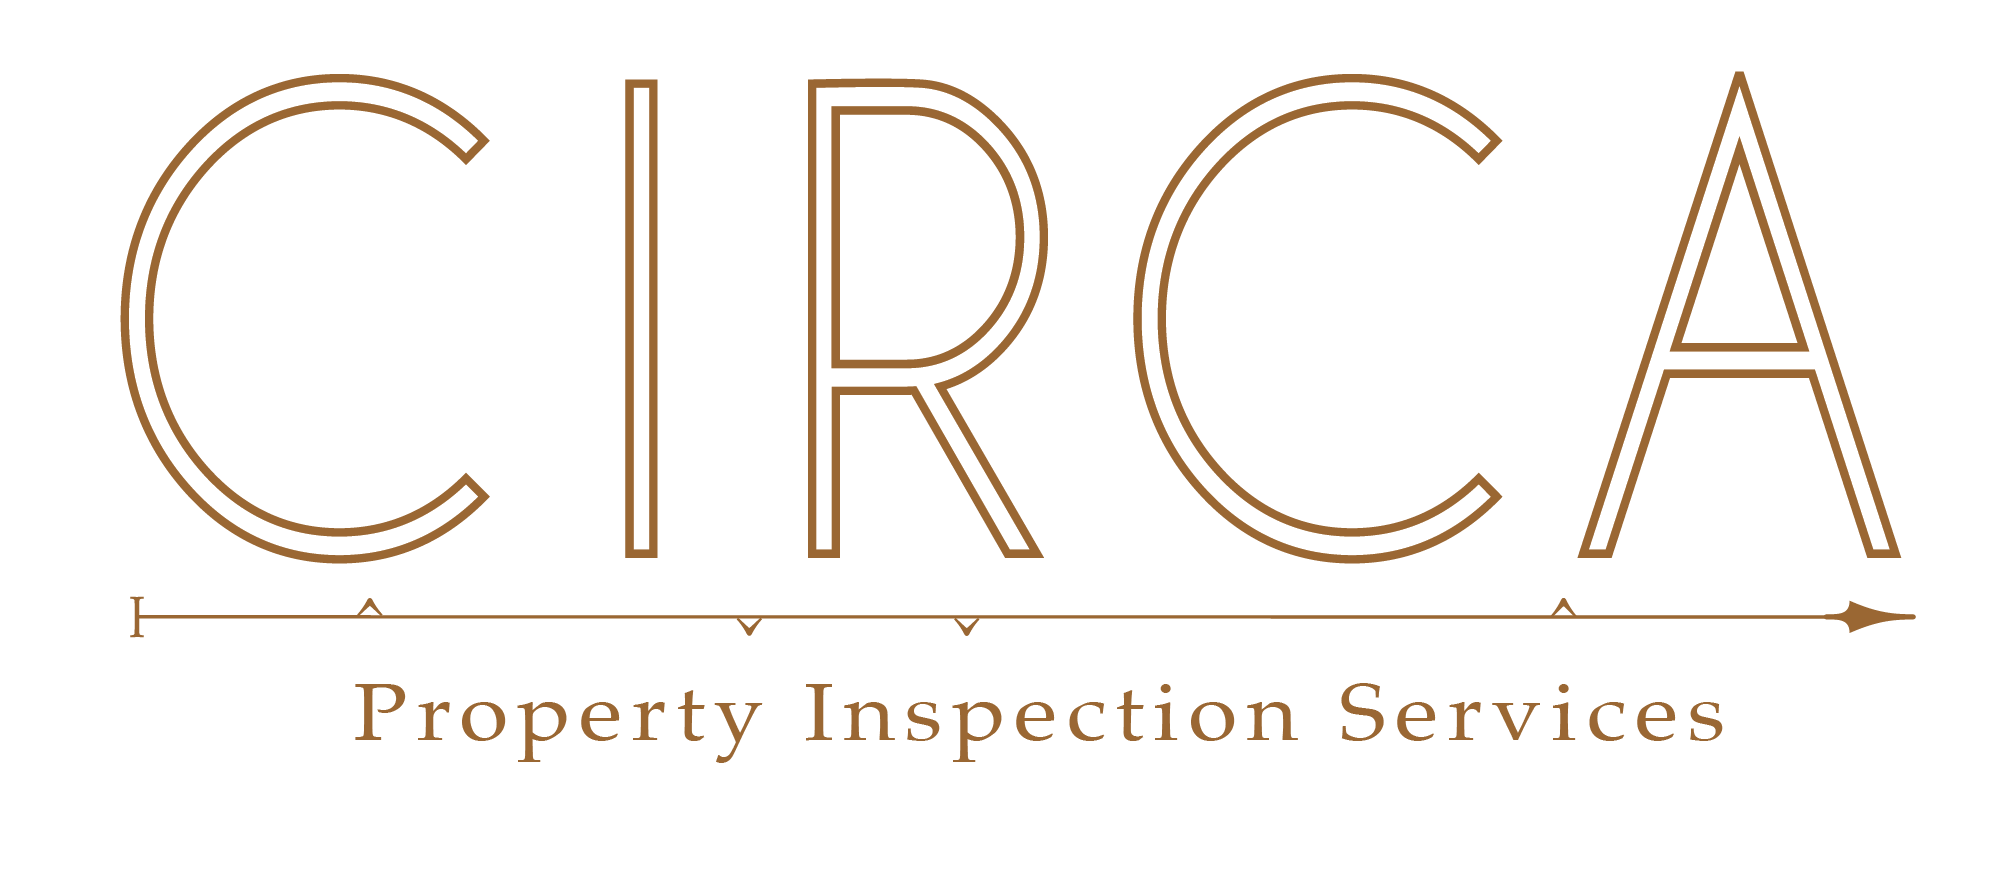 CIRCA Property Inspection Services